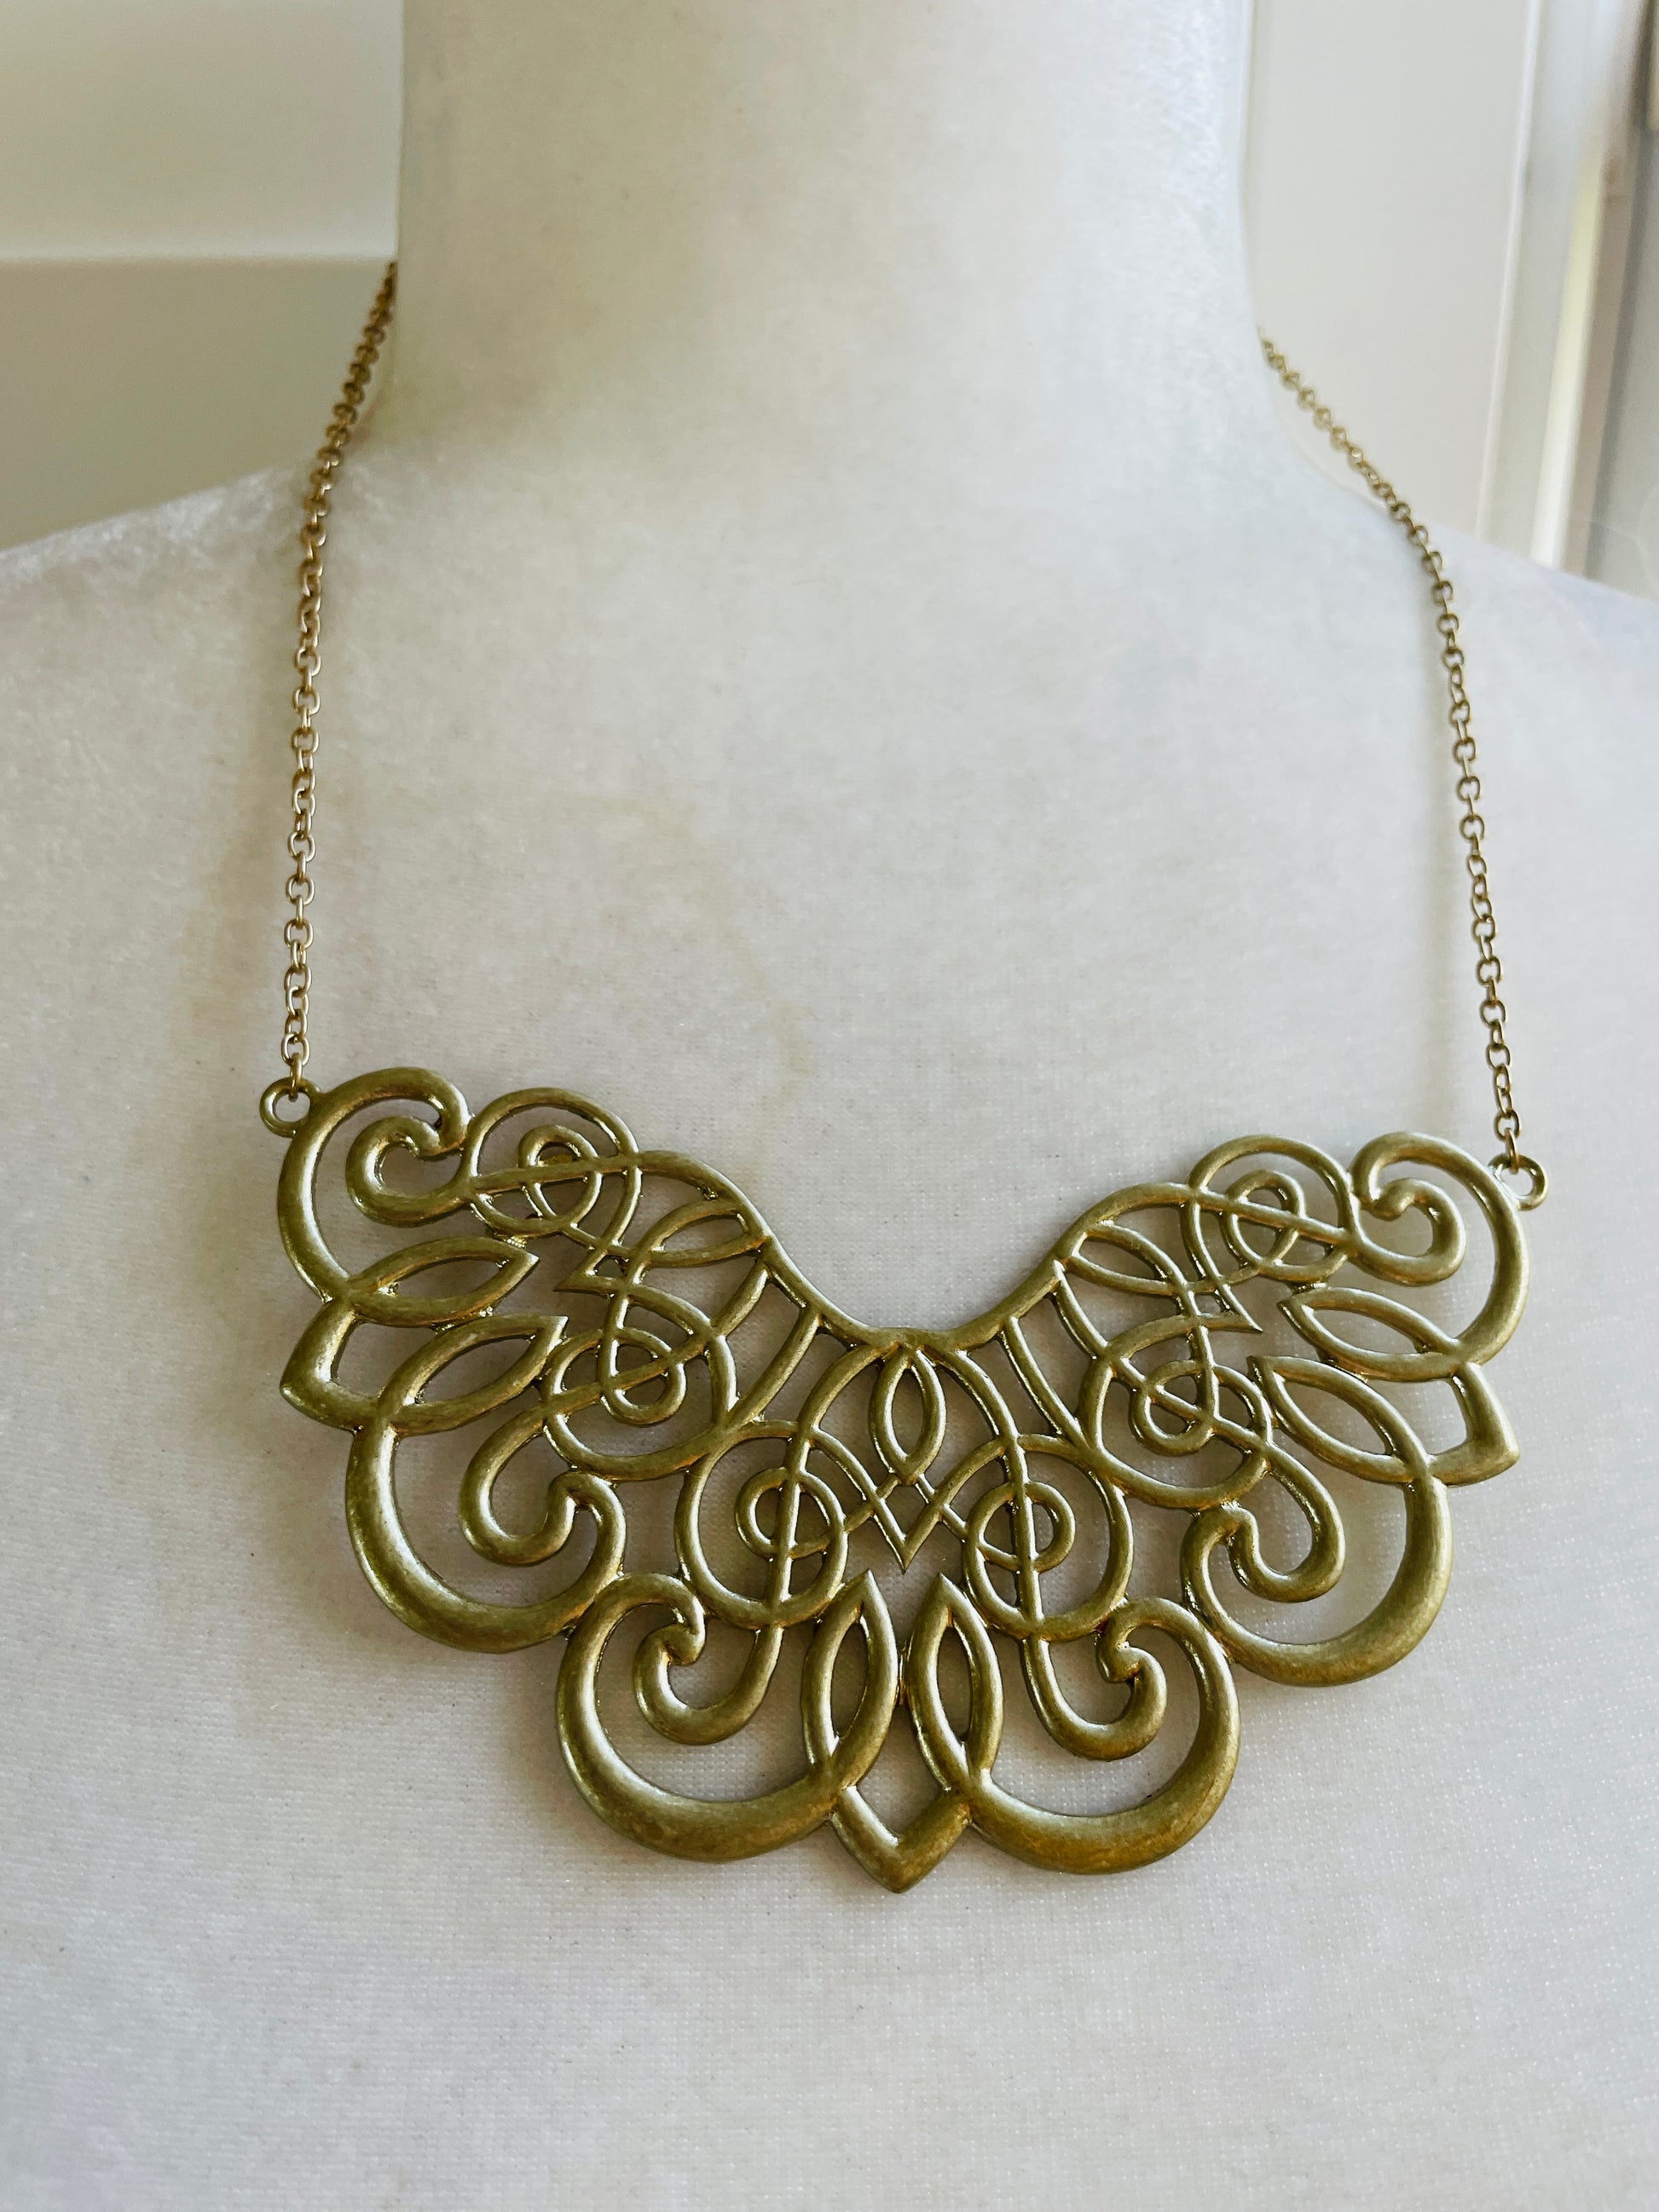 90s bib necklace  Vintage Brushed Gold Tone 90s Decorative Design Bib Necklace